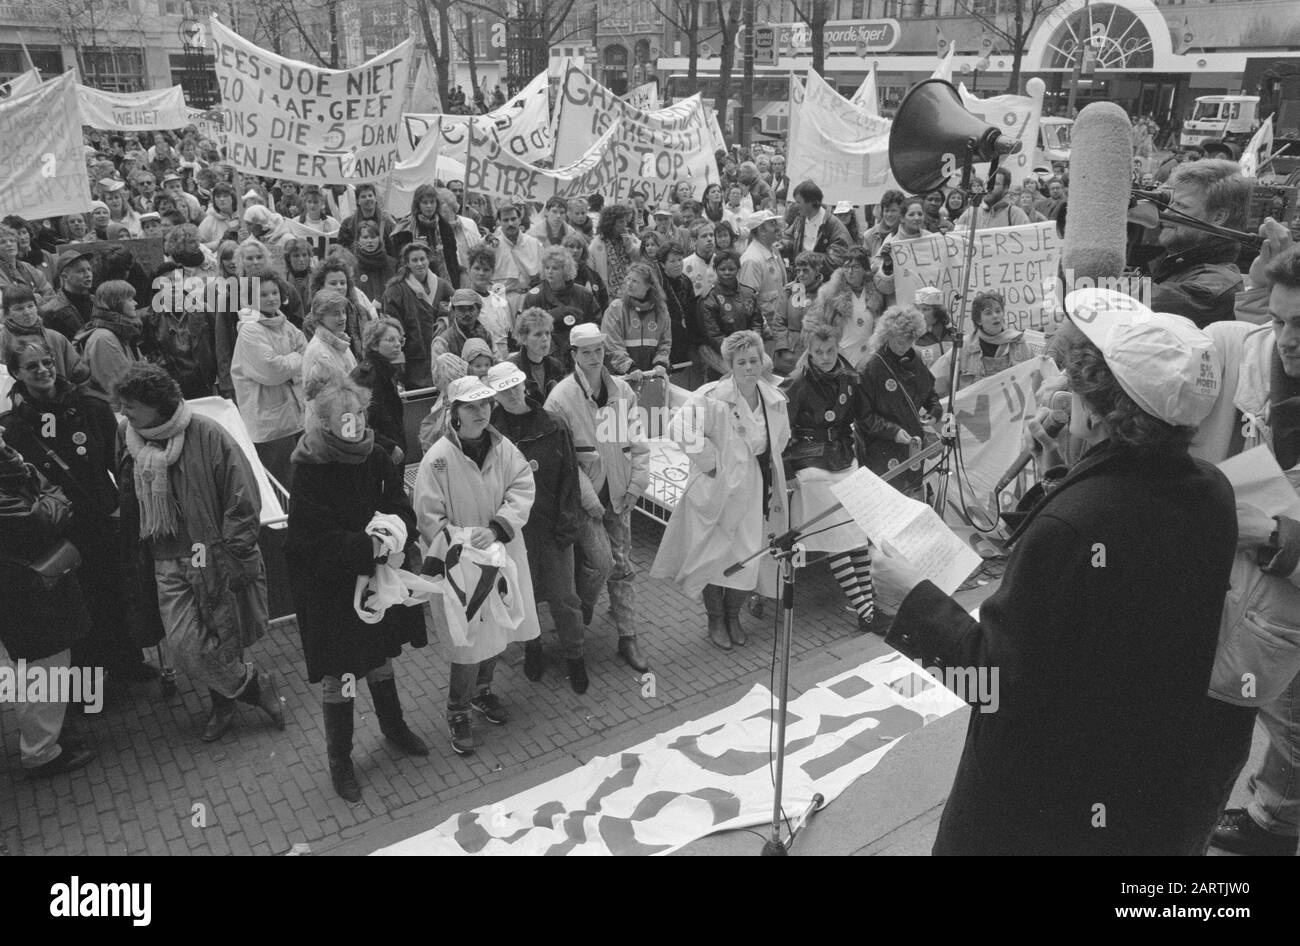 Actions of nurses in Amsterdam  Speaker Mrs Eerland (CFO) at the Beursplein Date: 5 april 1989 Location: Amsterdam, Noord-Holland Keywords: actions, speakers, nurses Stock Photo